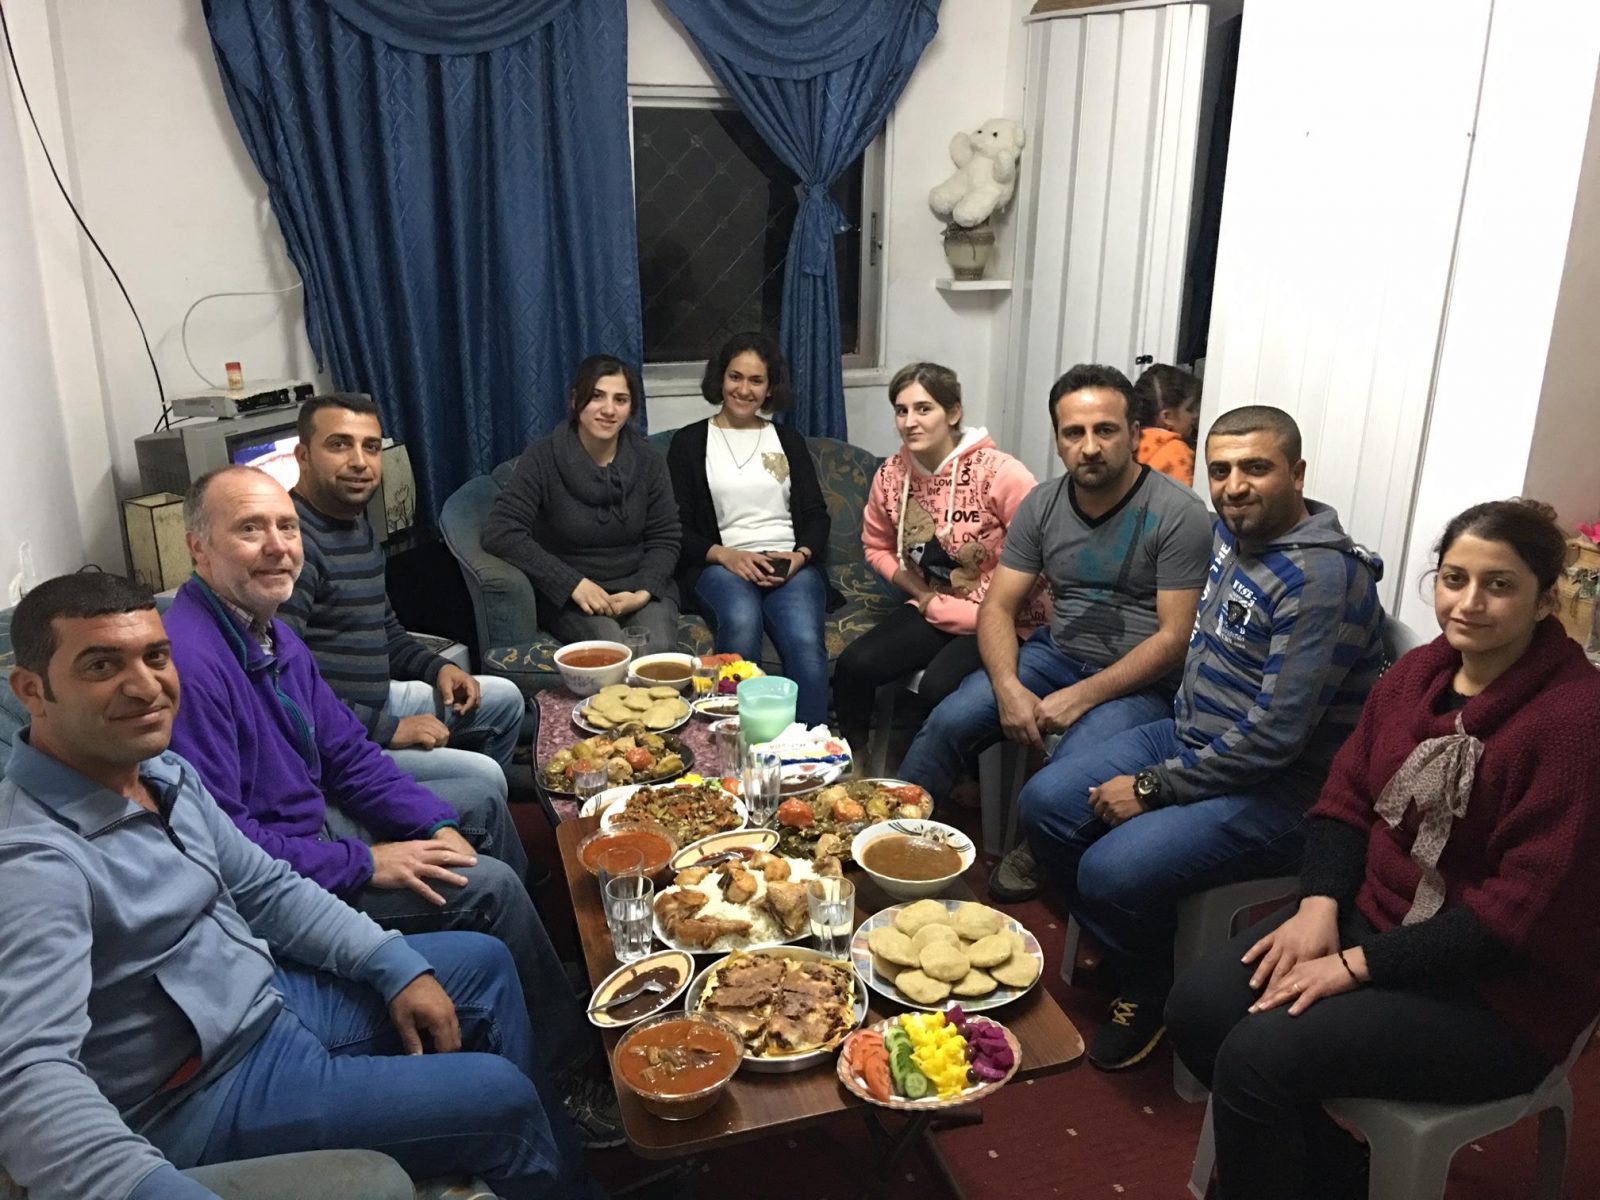 Jordan visit brings new hope, if not a new home